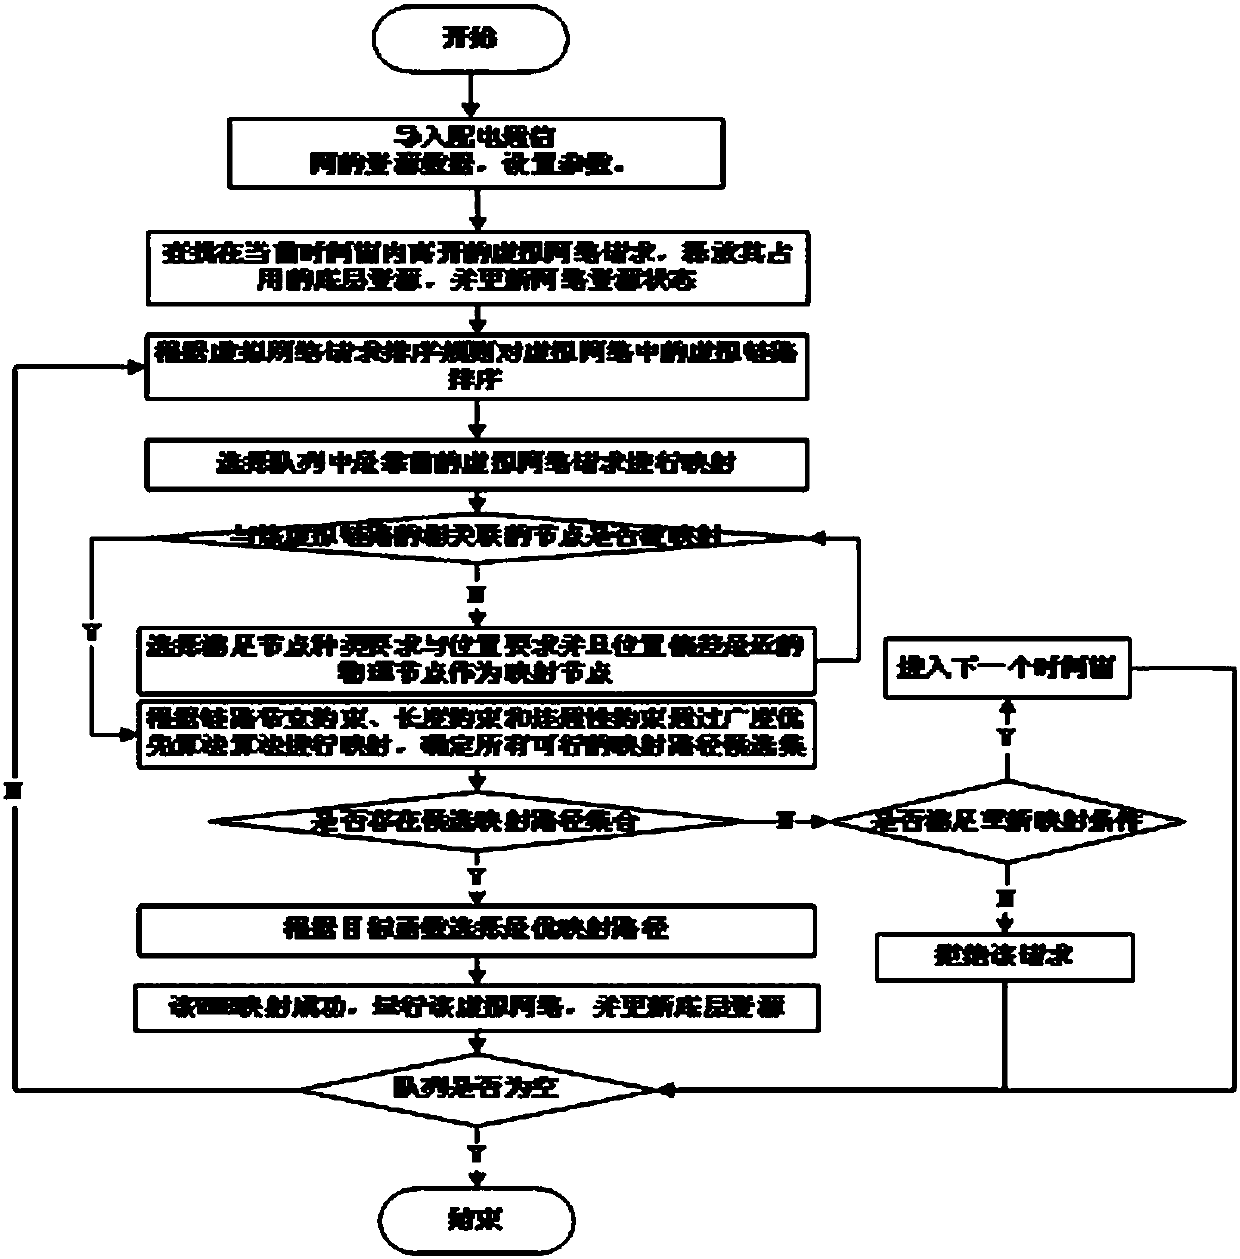 Dynamic wireless resource distribution algorithm based on load balancing